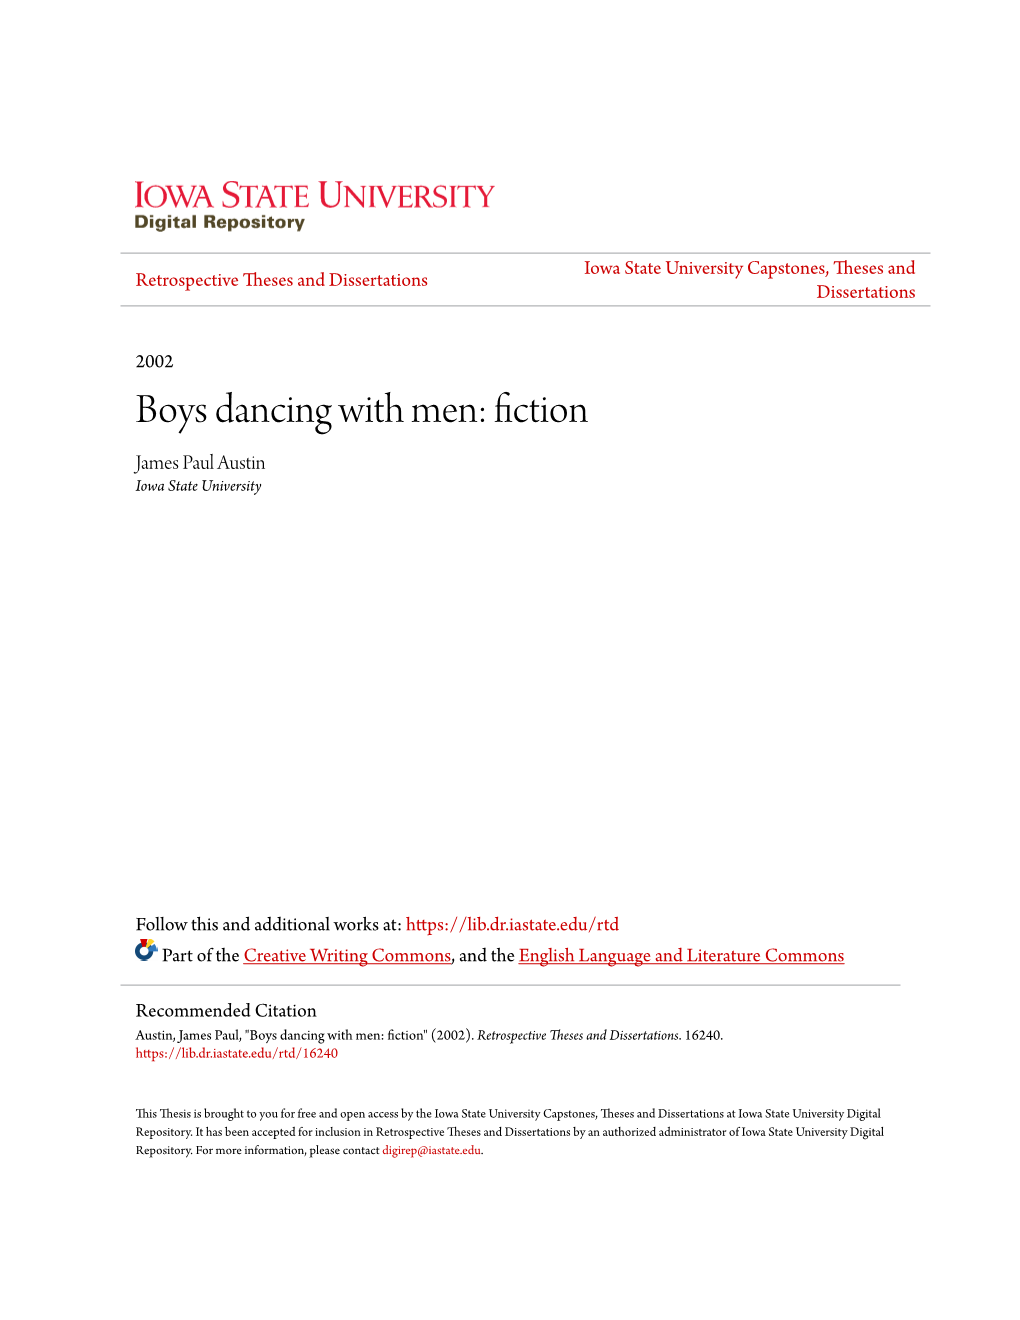 Boys Dancing with Men: Fiction James Paul Austin Iowa State University